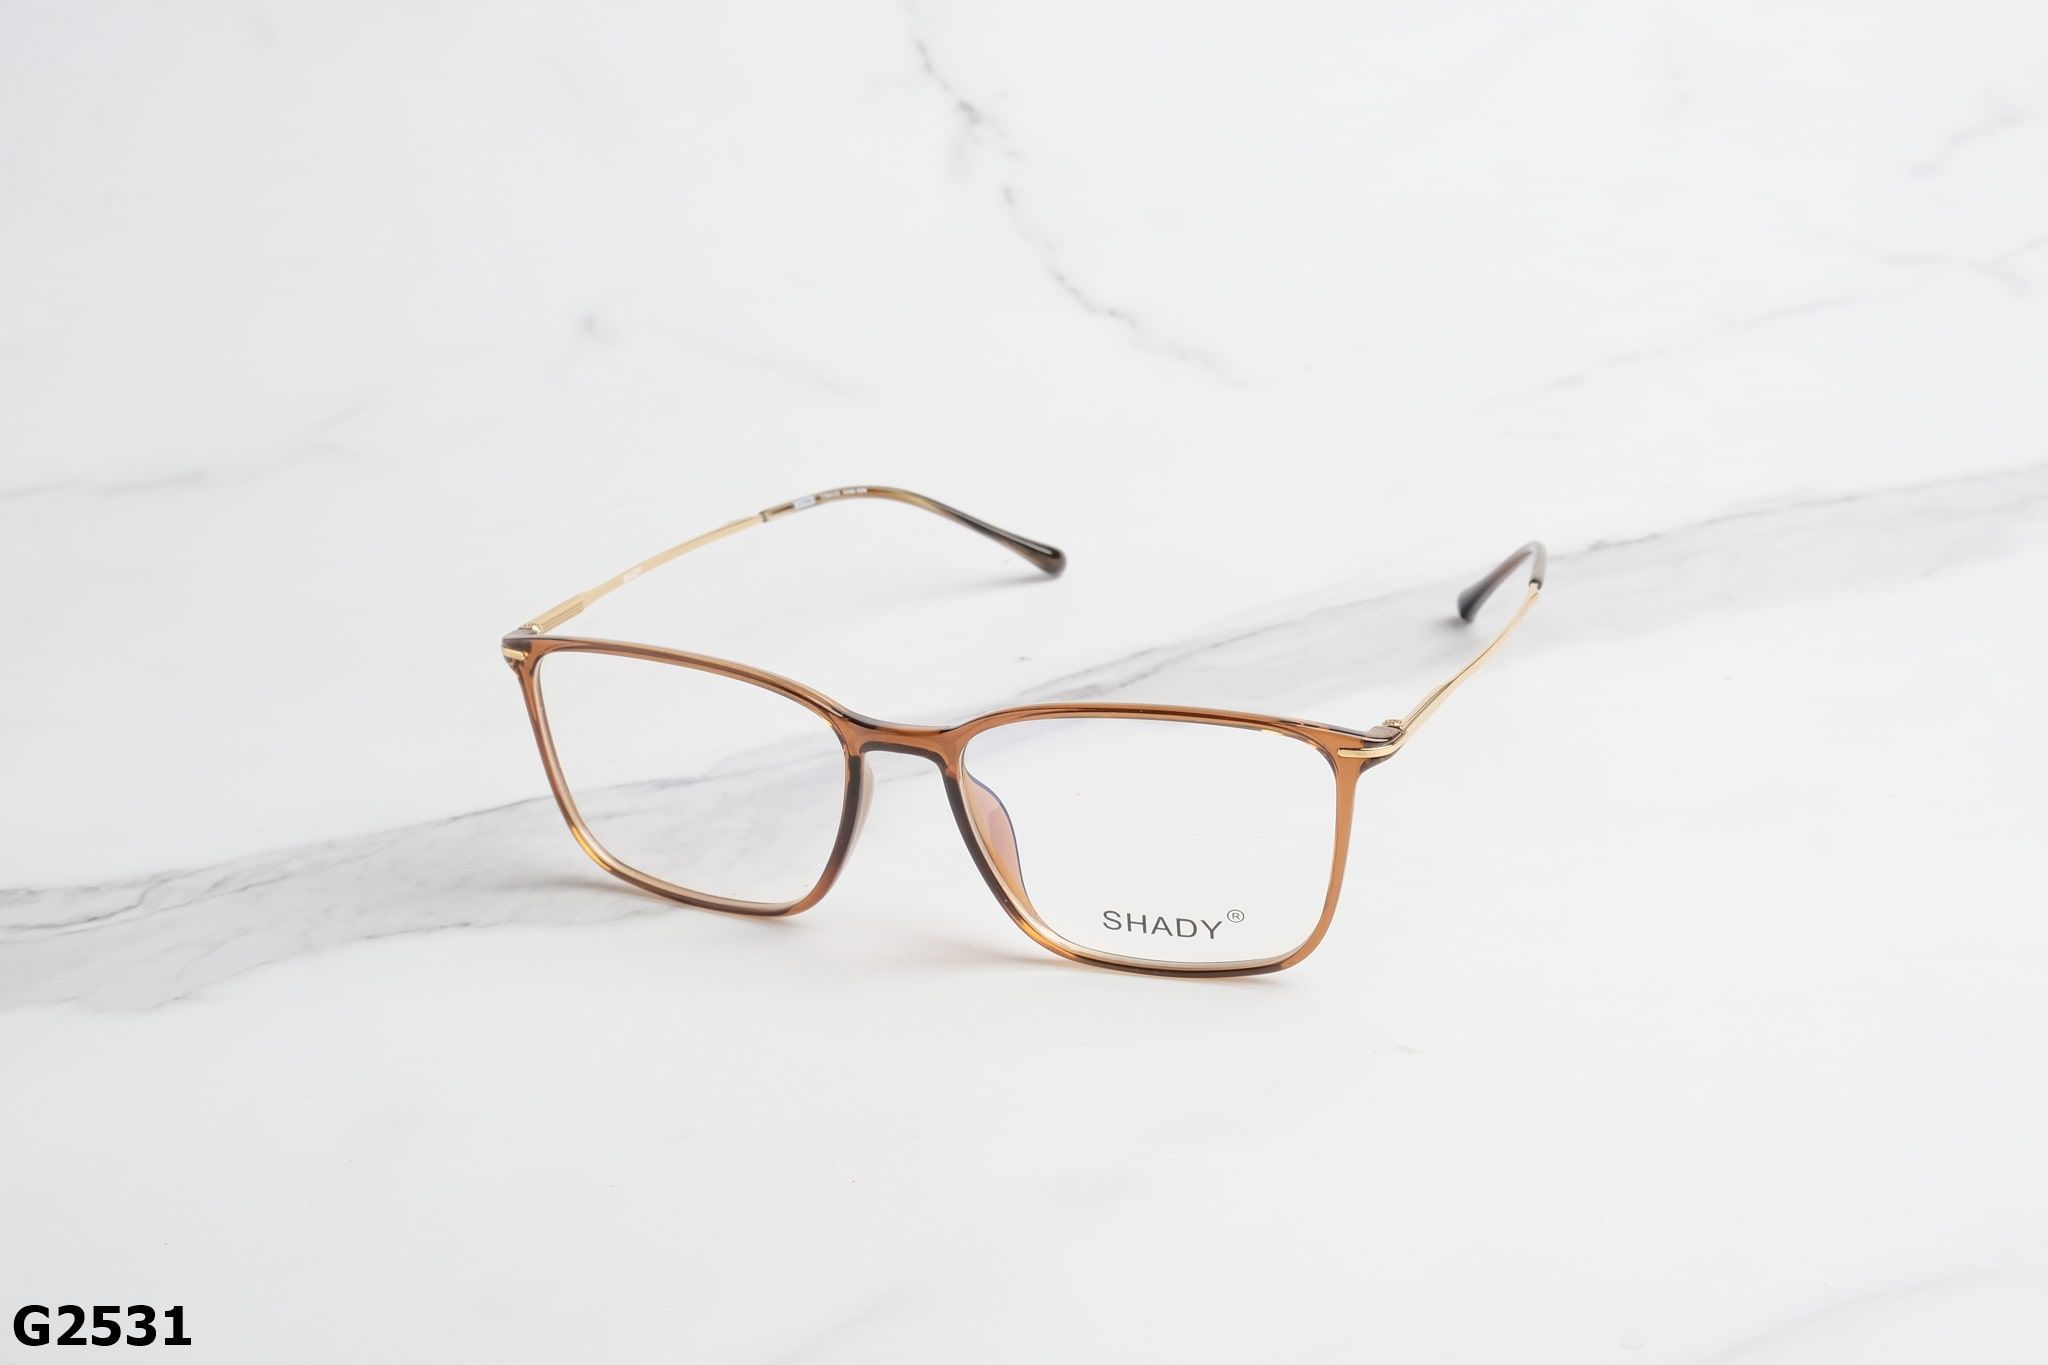  SHADY Eyewear - Glasses - G2531 